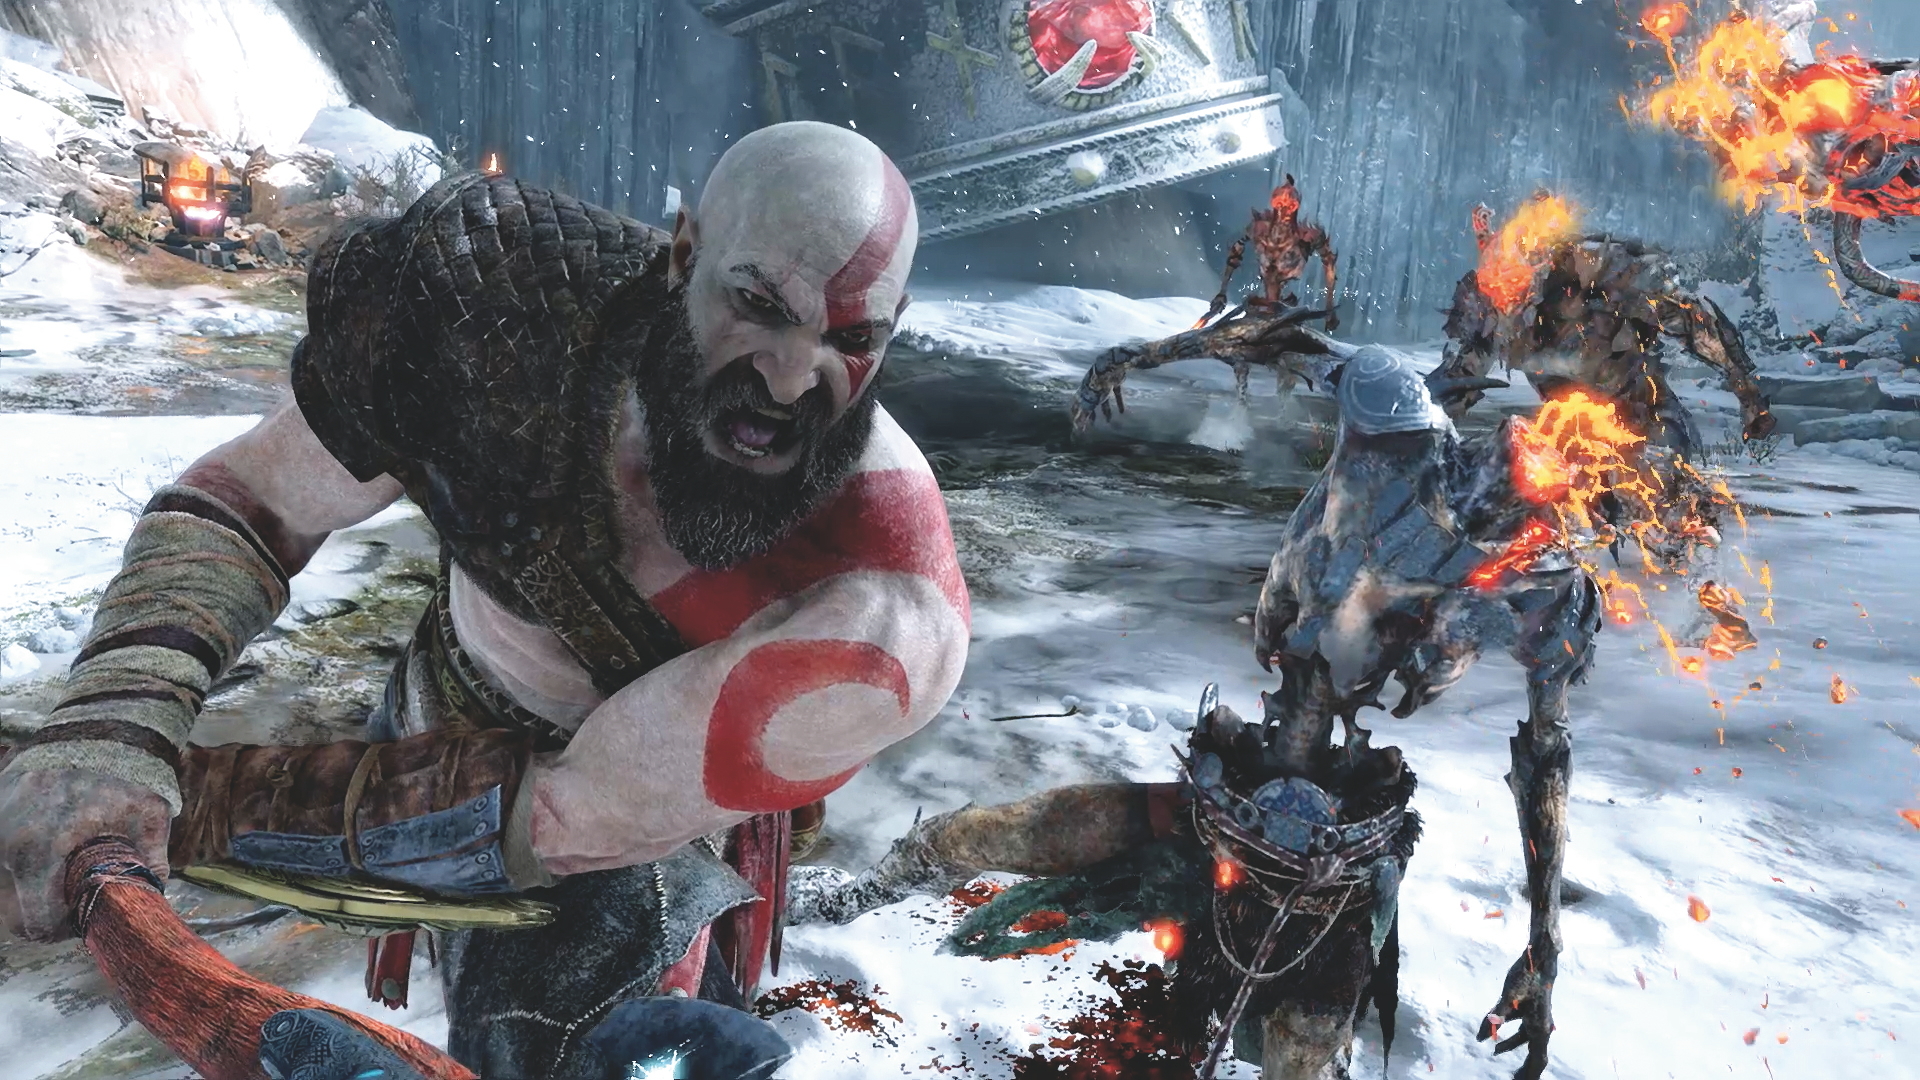 Kratos Voice Actor Secretly Quit When Ragnarok Was Announced